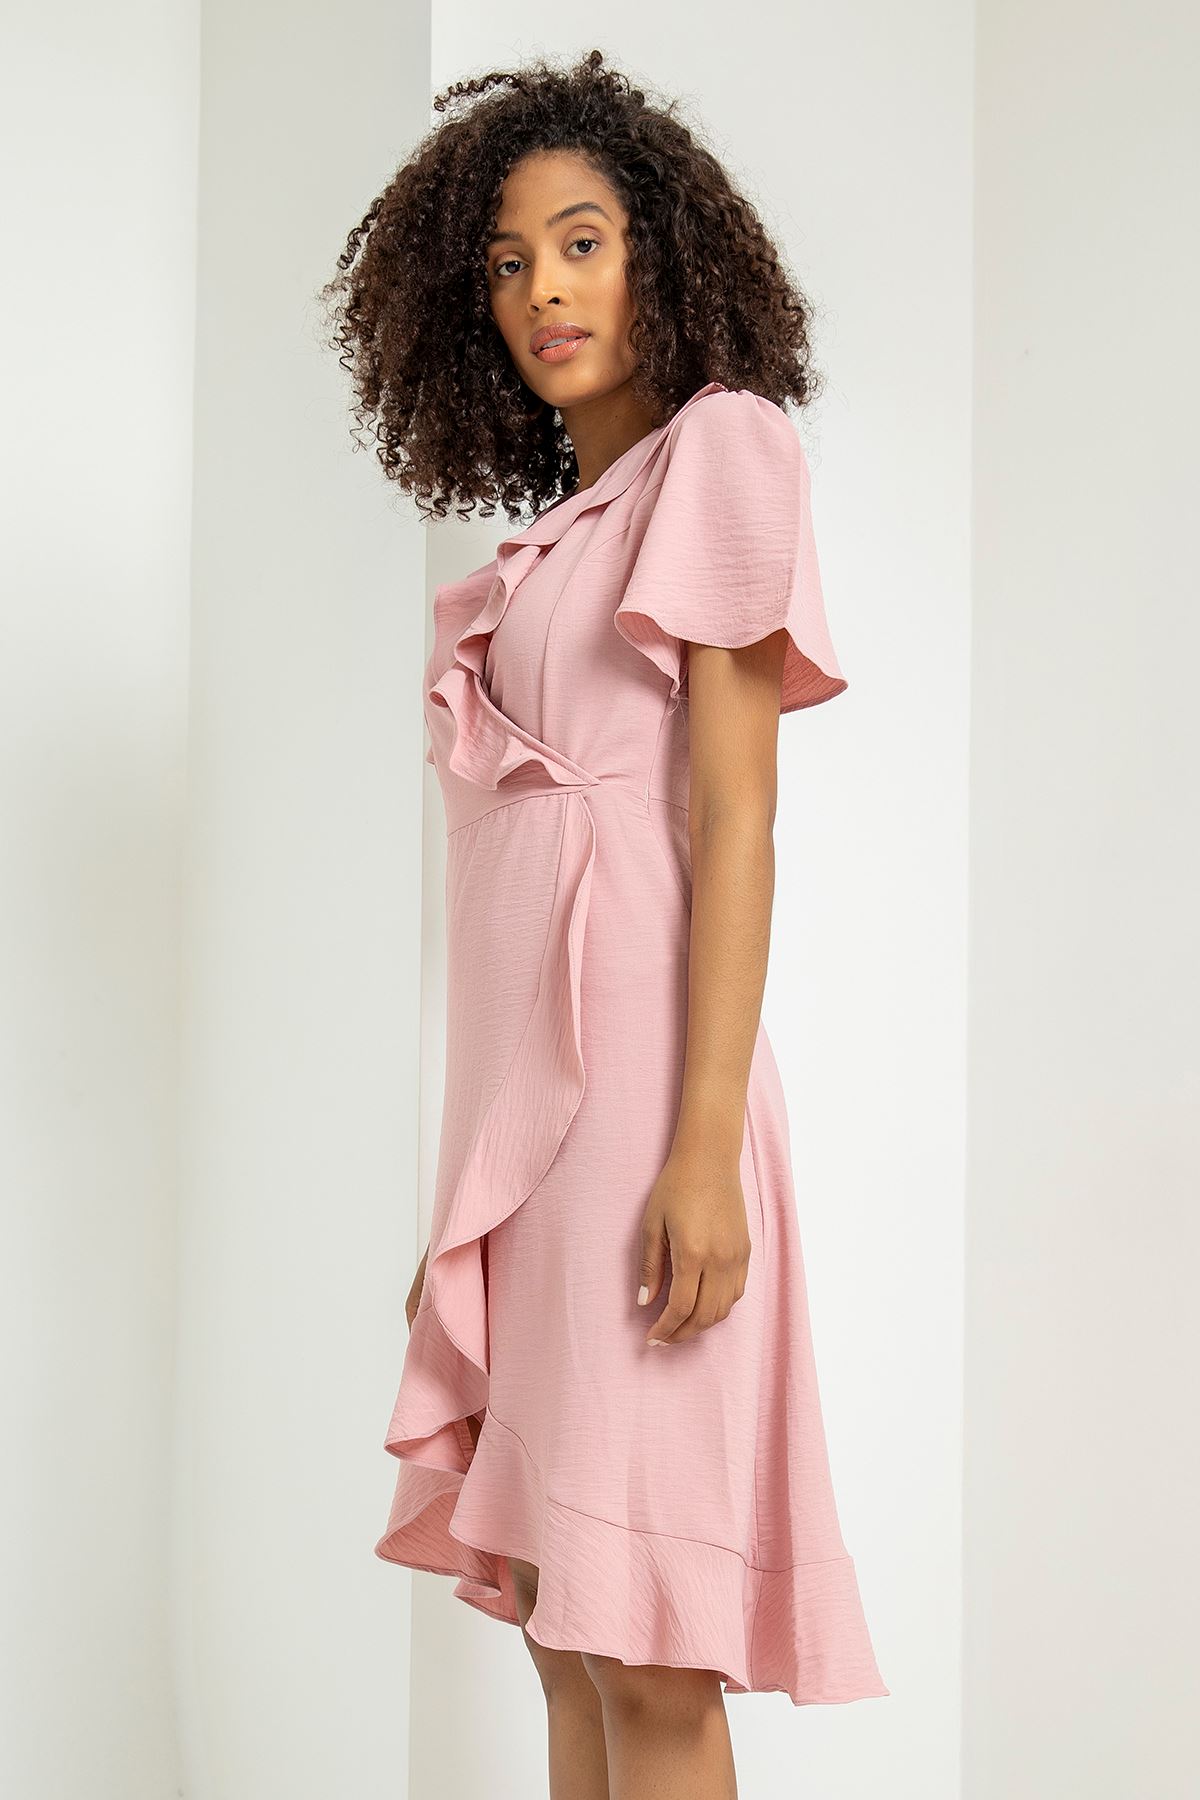 Aerobin Fabric Short Sleeve Ruffled Collar Comfy Fit Women Dress - Rose 